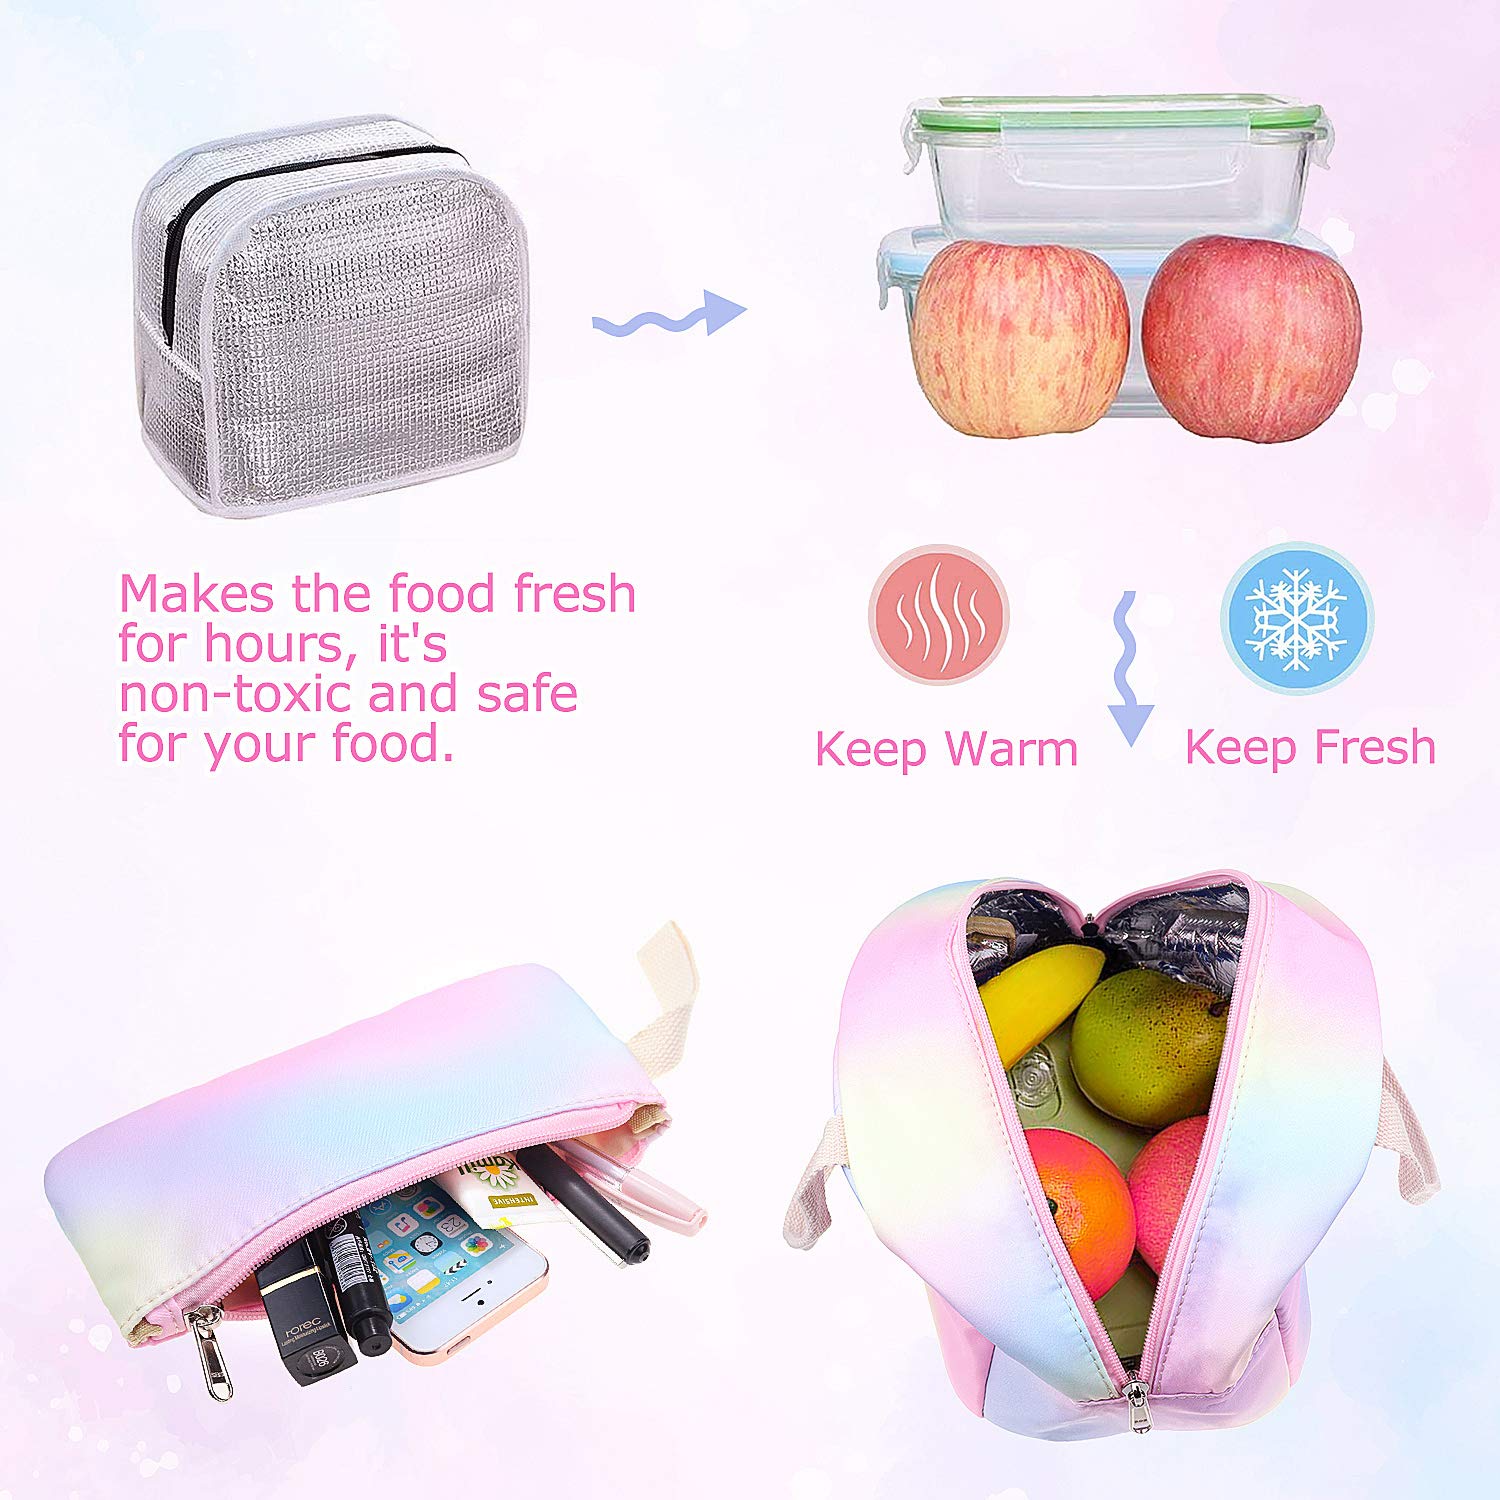 Junlion Rainbow Backpack Set 3-in-1 Kids School Bag, Laptop Backpack Lunch Bag Pencil Case Gift for Teen Girls Womens